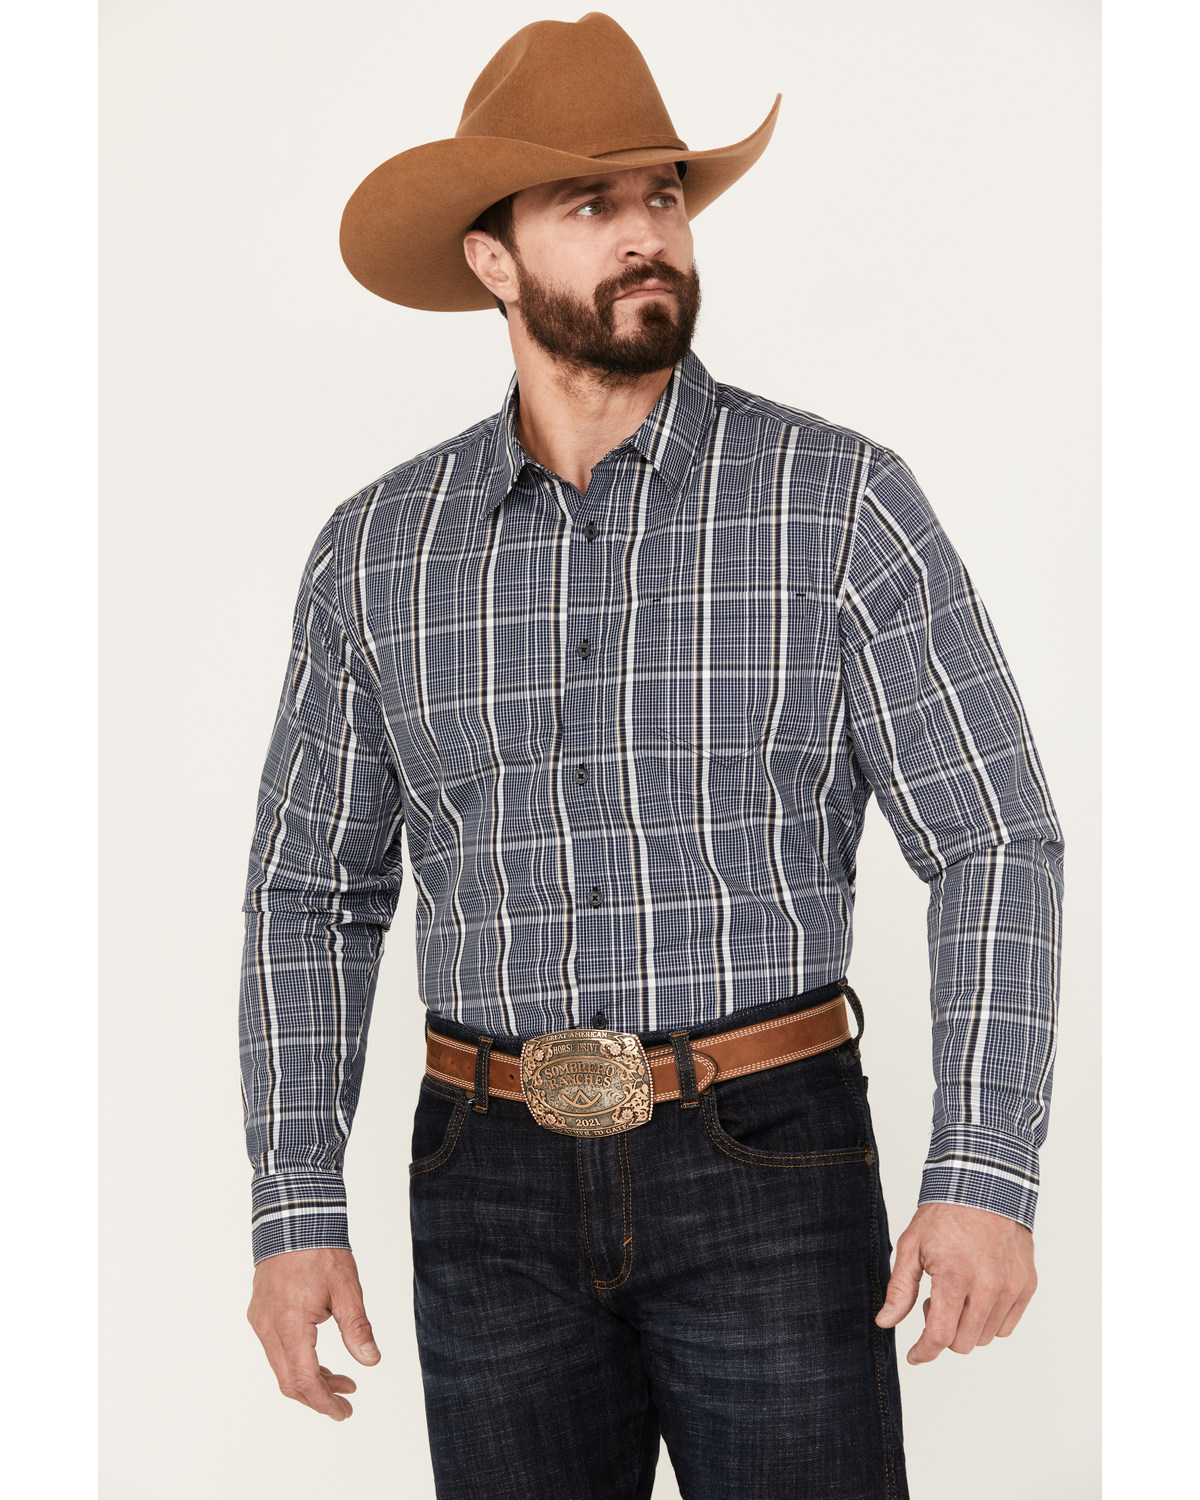 Gibson Trading Co Men's Night Watch Plaid Print Long Sleeve Button-Down Western Shirt